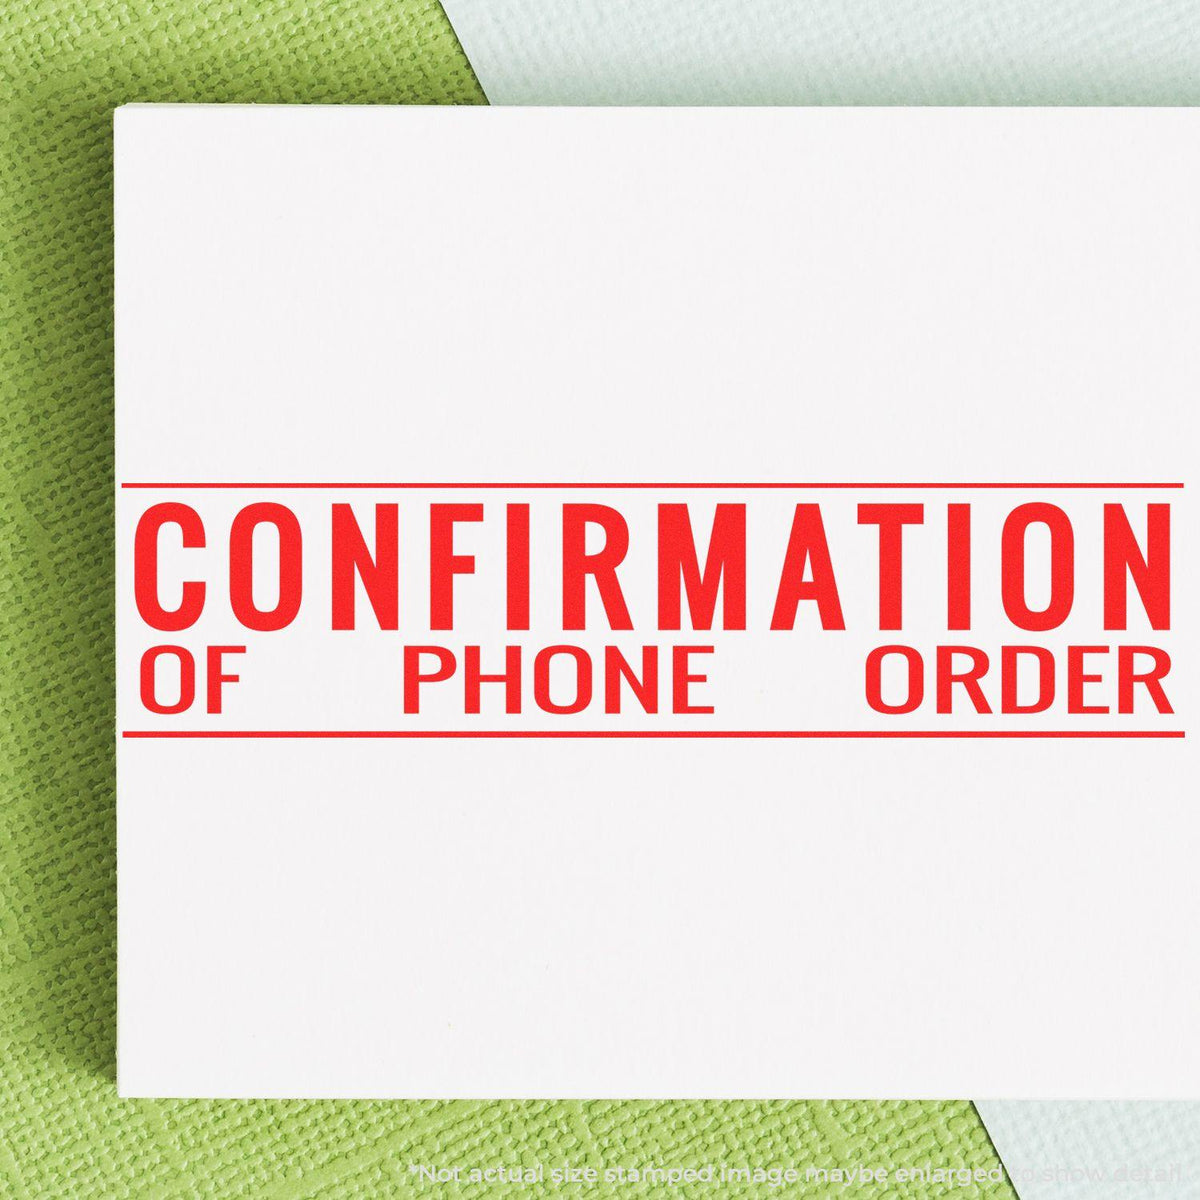 In Use Slim Pre-Inked Confirmation of Phone Order Stamp Image